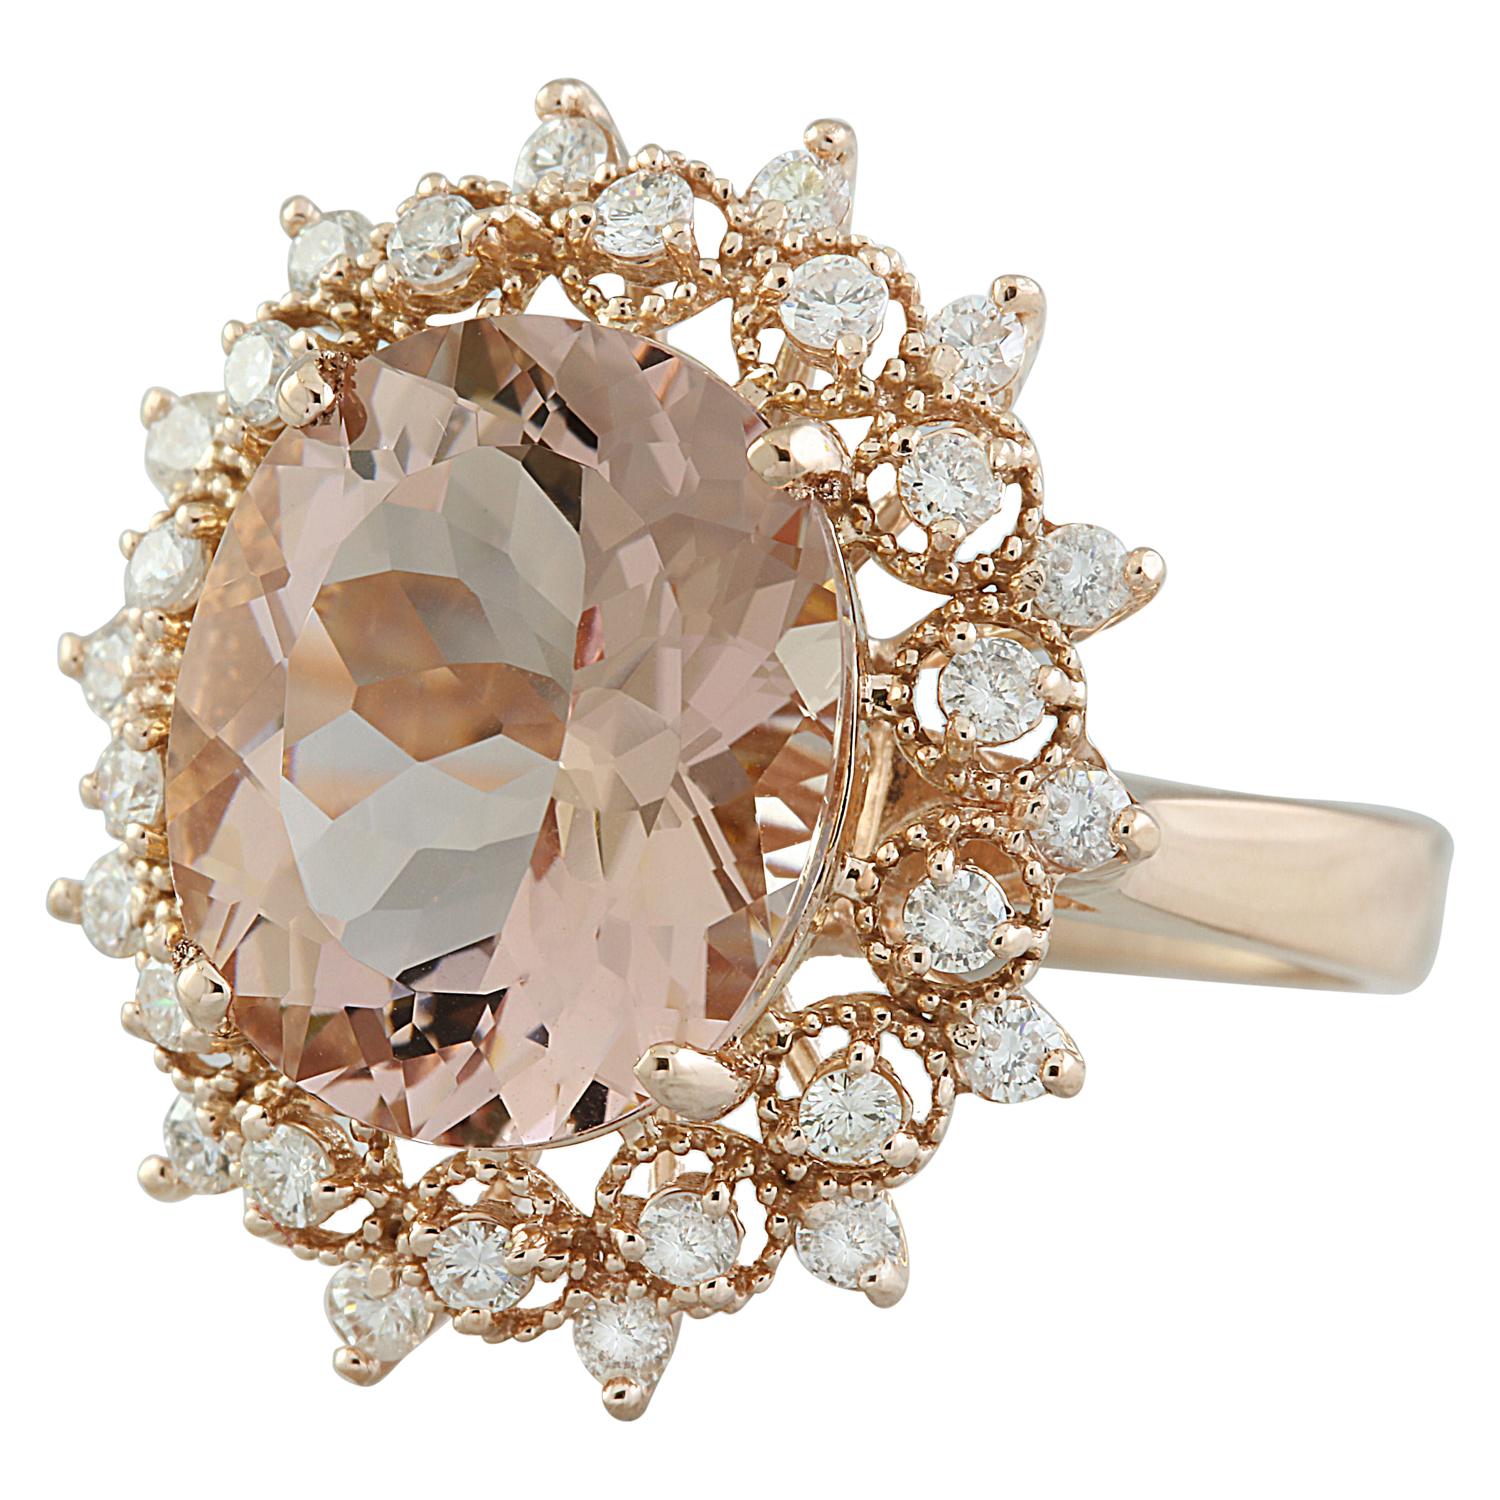 6.01 Carat Natural Morganite 14 Karat Solid Rose Gold Diamond Ring
Stamped: 14K 
Total Ring Weight: 5 Grams 
Morganite Weight: 5.41 Carat (13.00x11.00 Millimeters)  
Diamond Weight: 0.60 Carat (F-G Color, VS2-SI1 Clarity )
Quantity: 28
Face